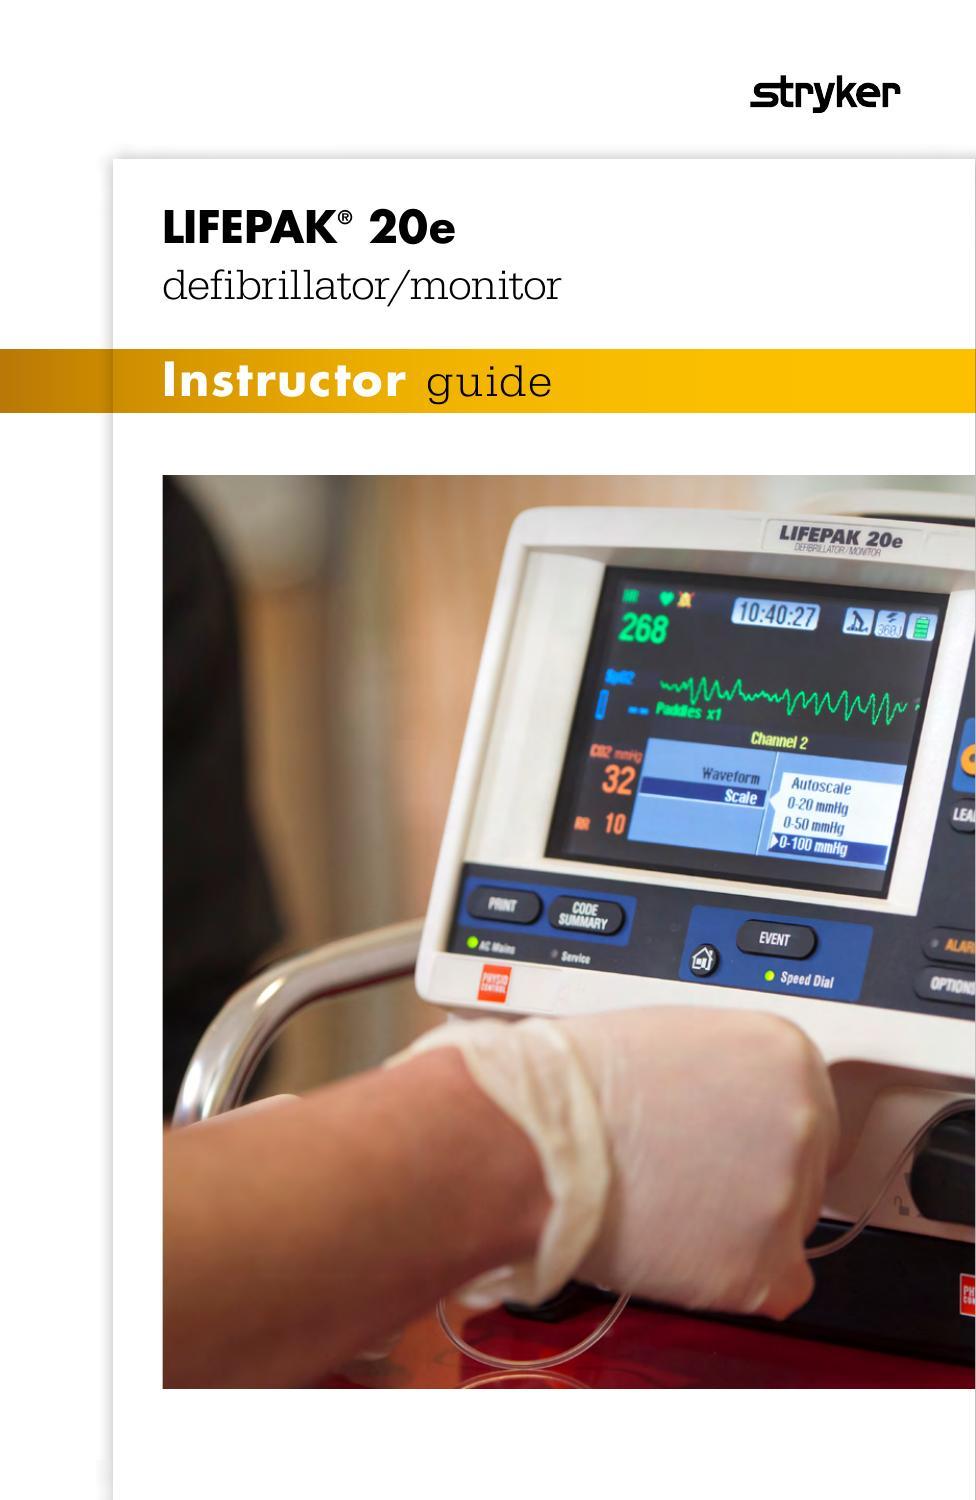 stryker-lifepak-20e-defibrillatormonitor-instructor-guide.pdf